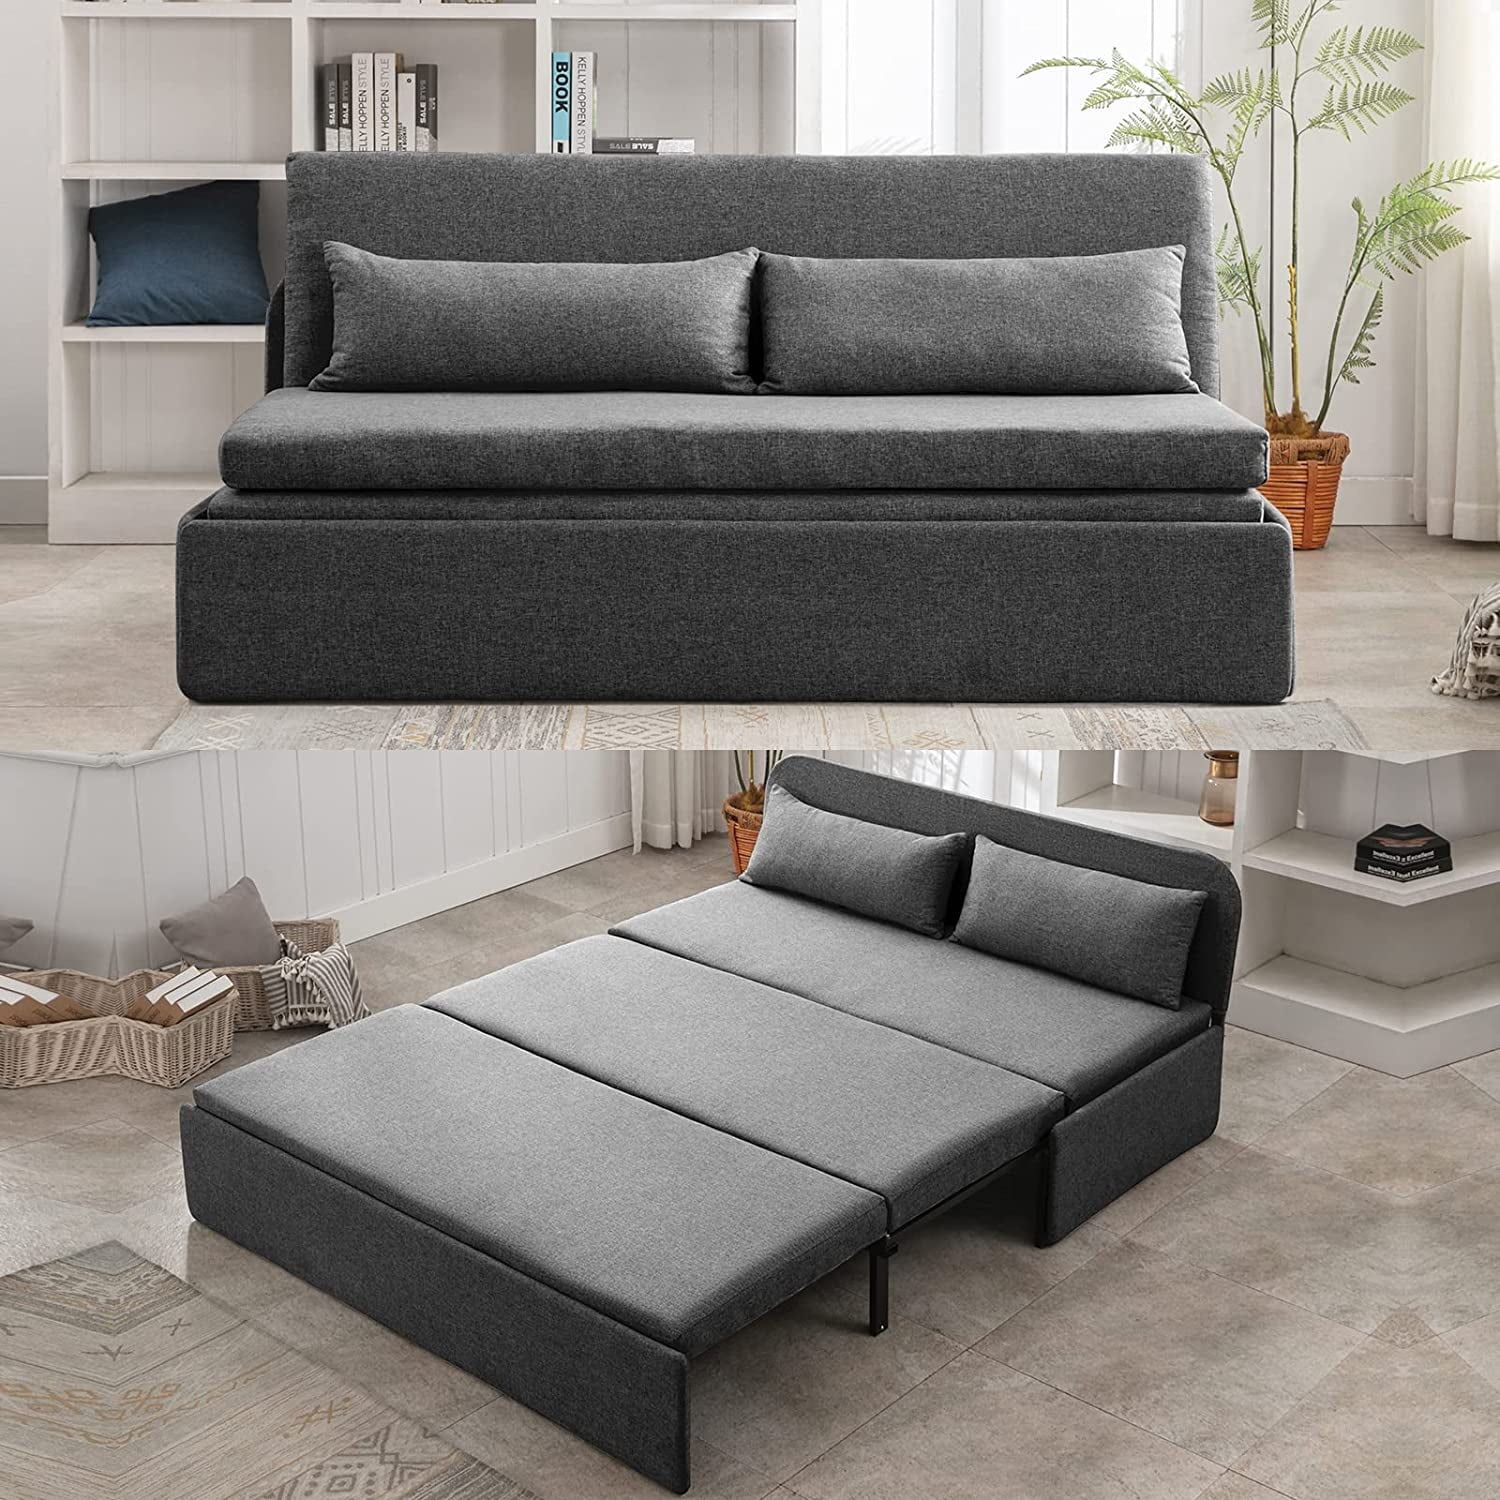 Mjkone Queen Size Convertible Sofa Bed, Modern Pull Out Linen Sleeper Regarding Queen Size Convertible Sofa Beds (Gallery 19 of 20)